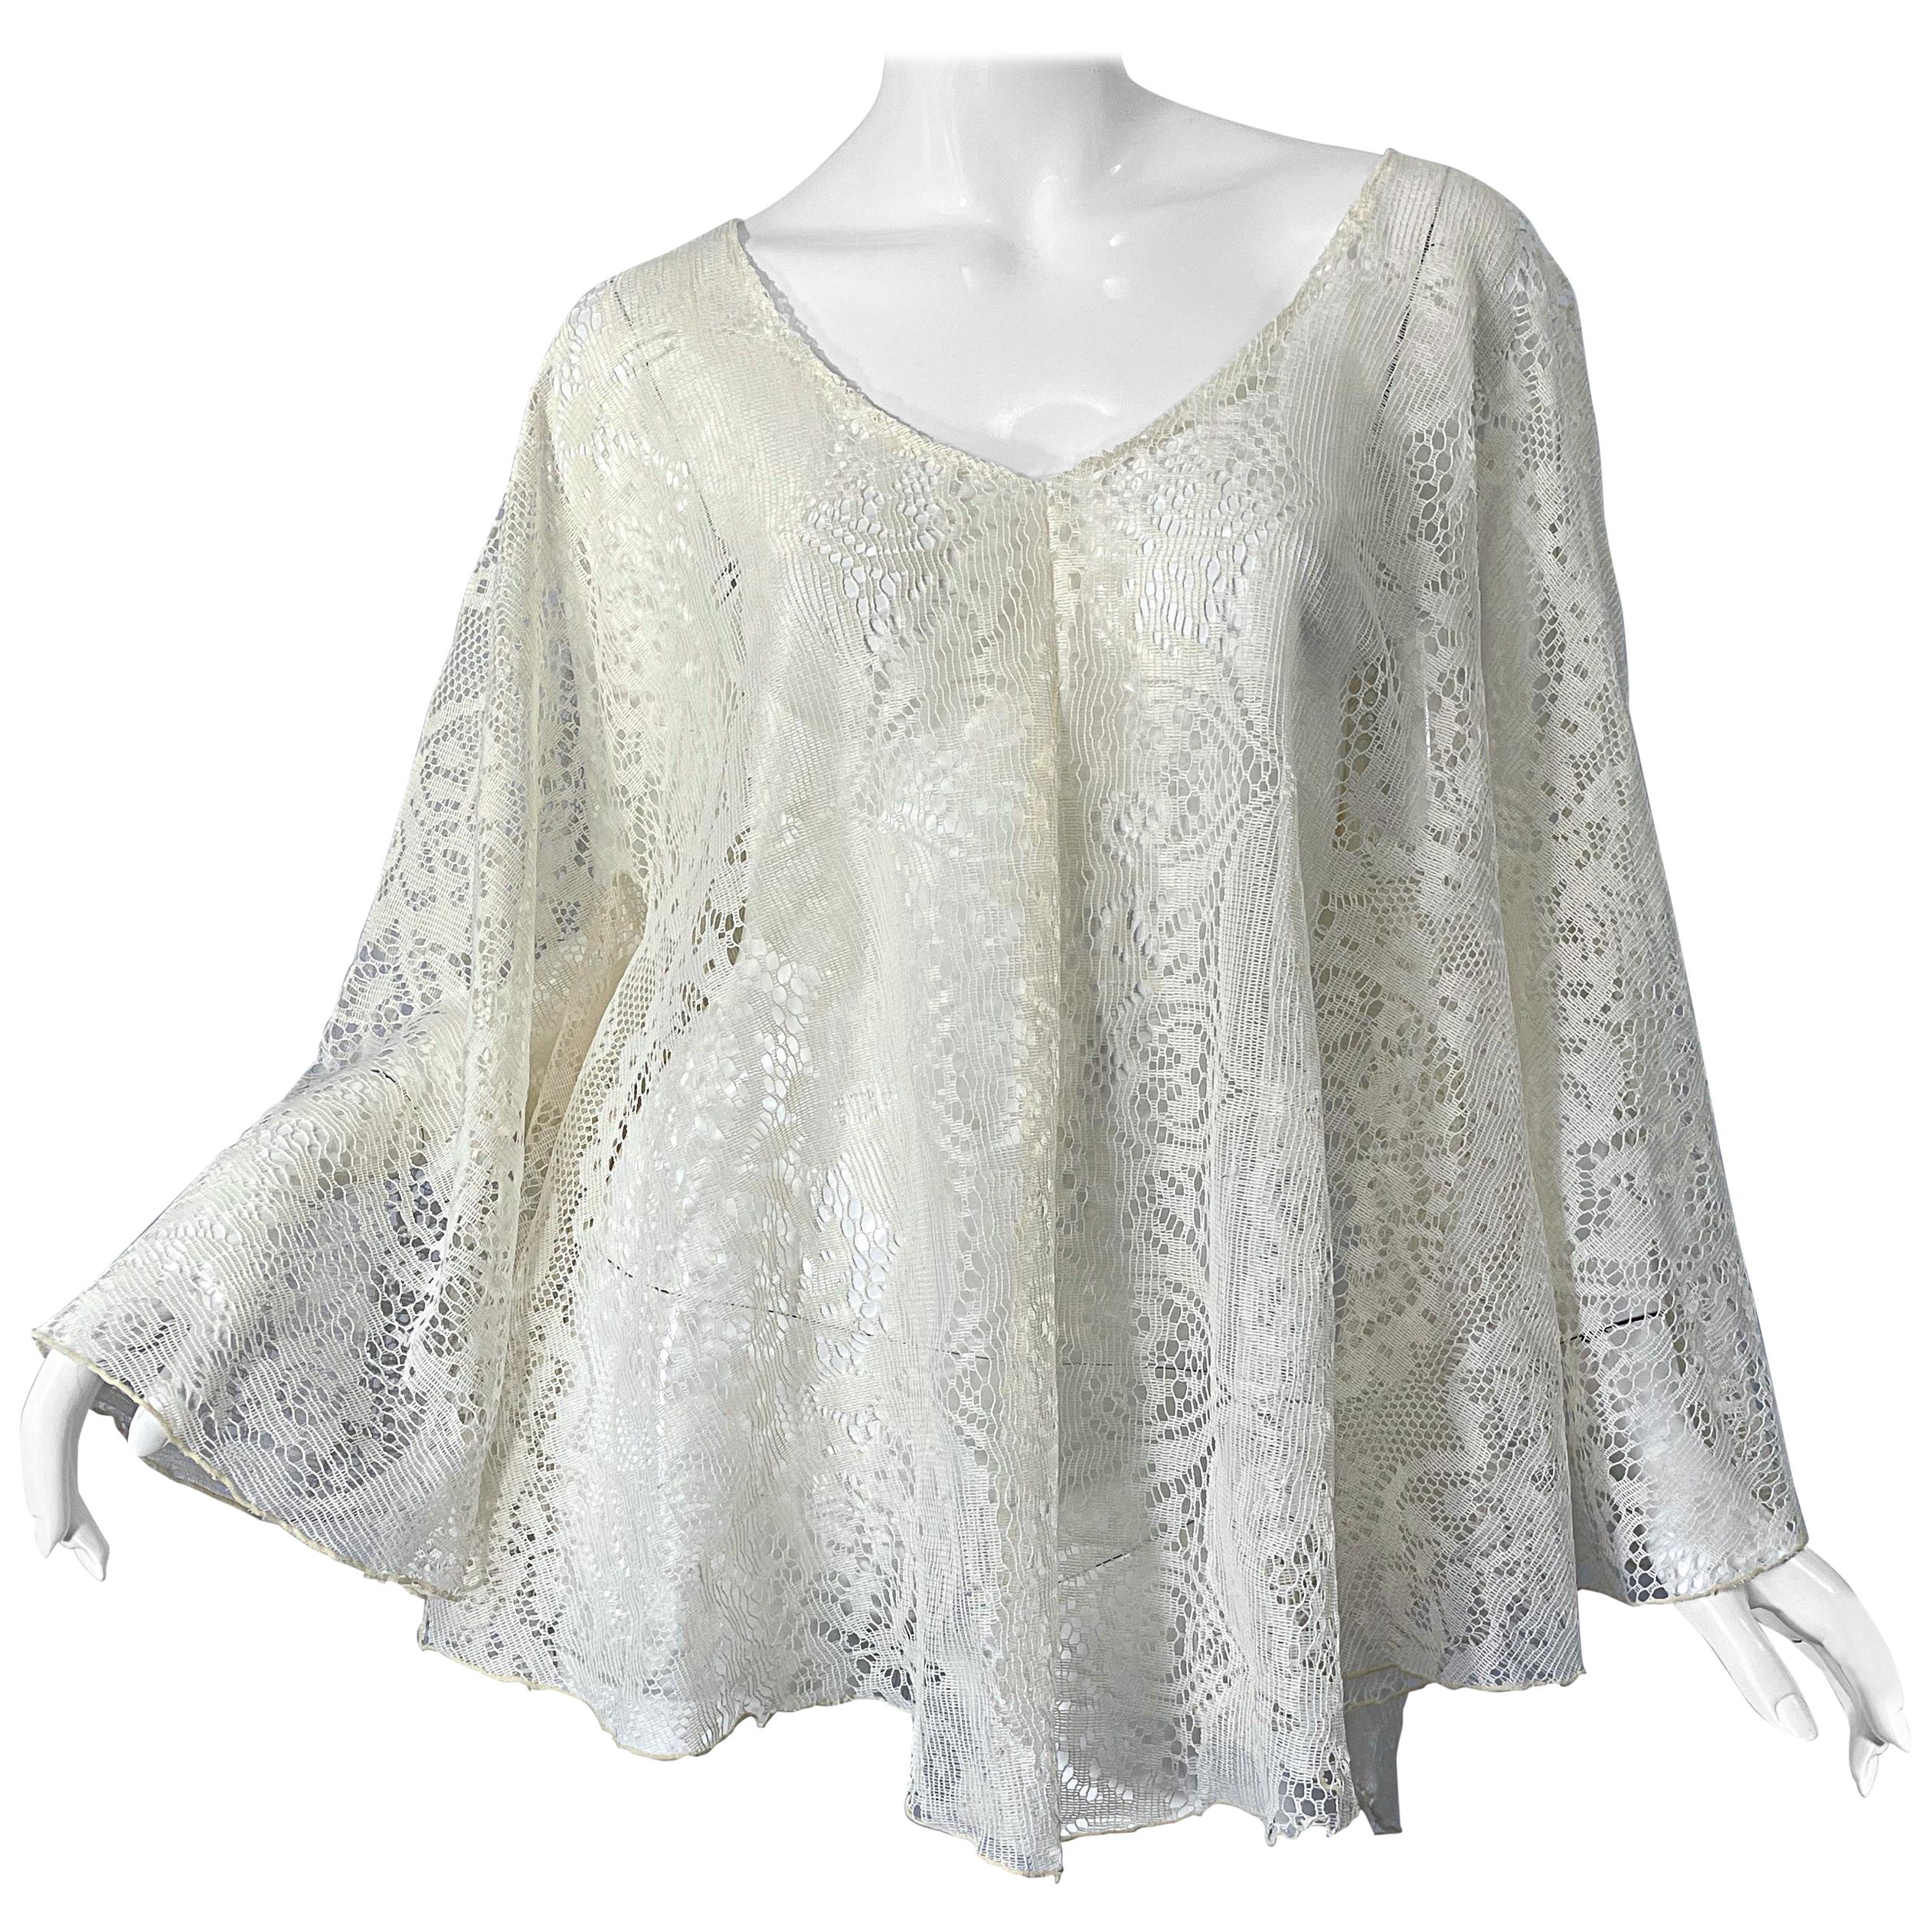 1970s Ivory Lace Bell Sleeve Kimono Poncho Style Vintage 70s Boho Top Shirt